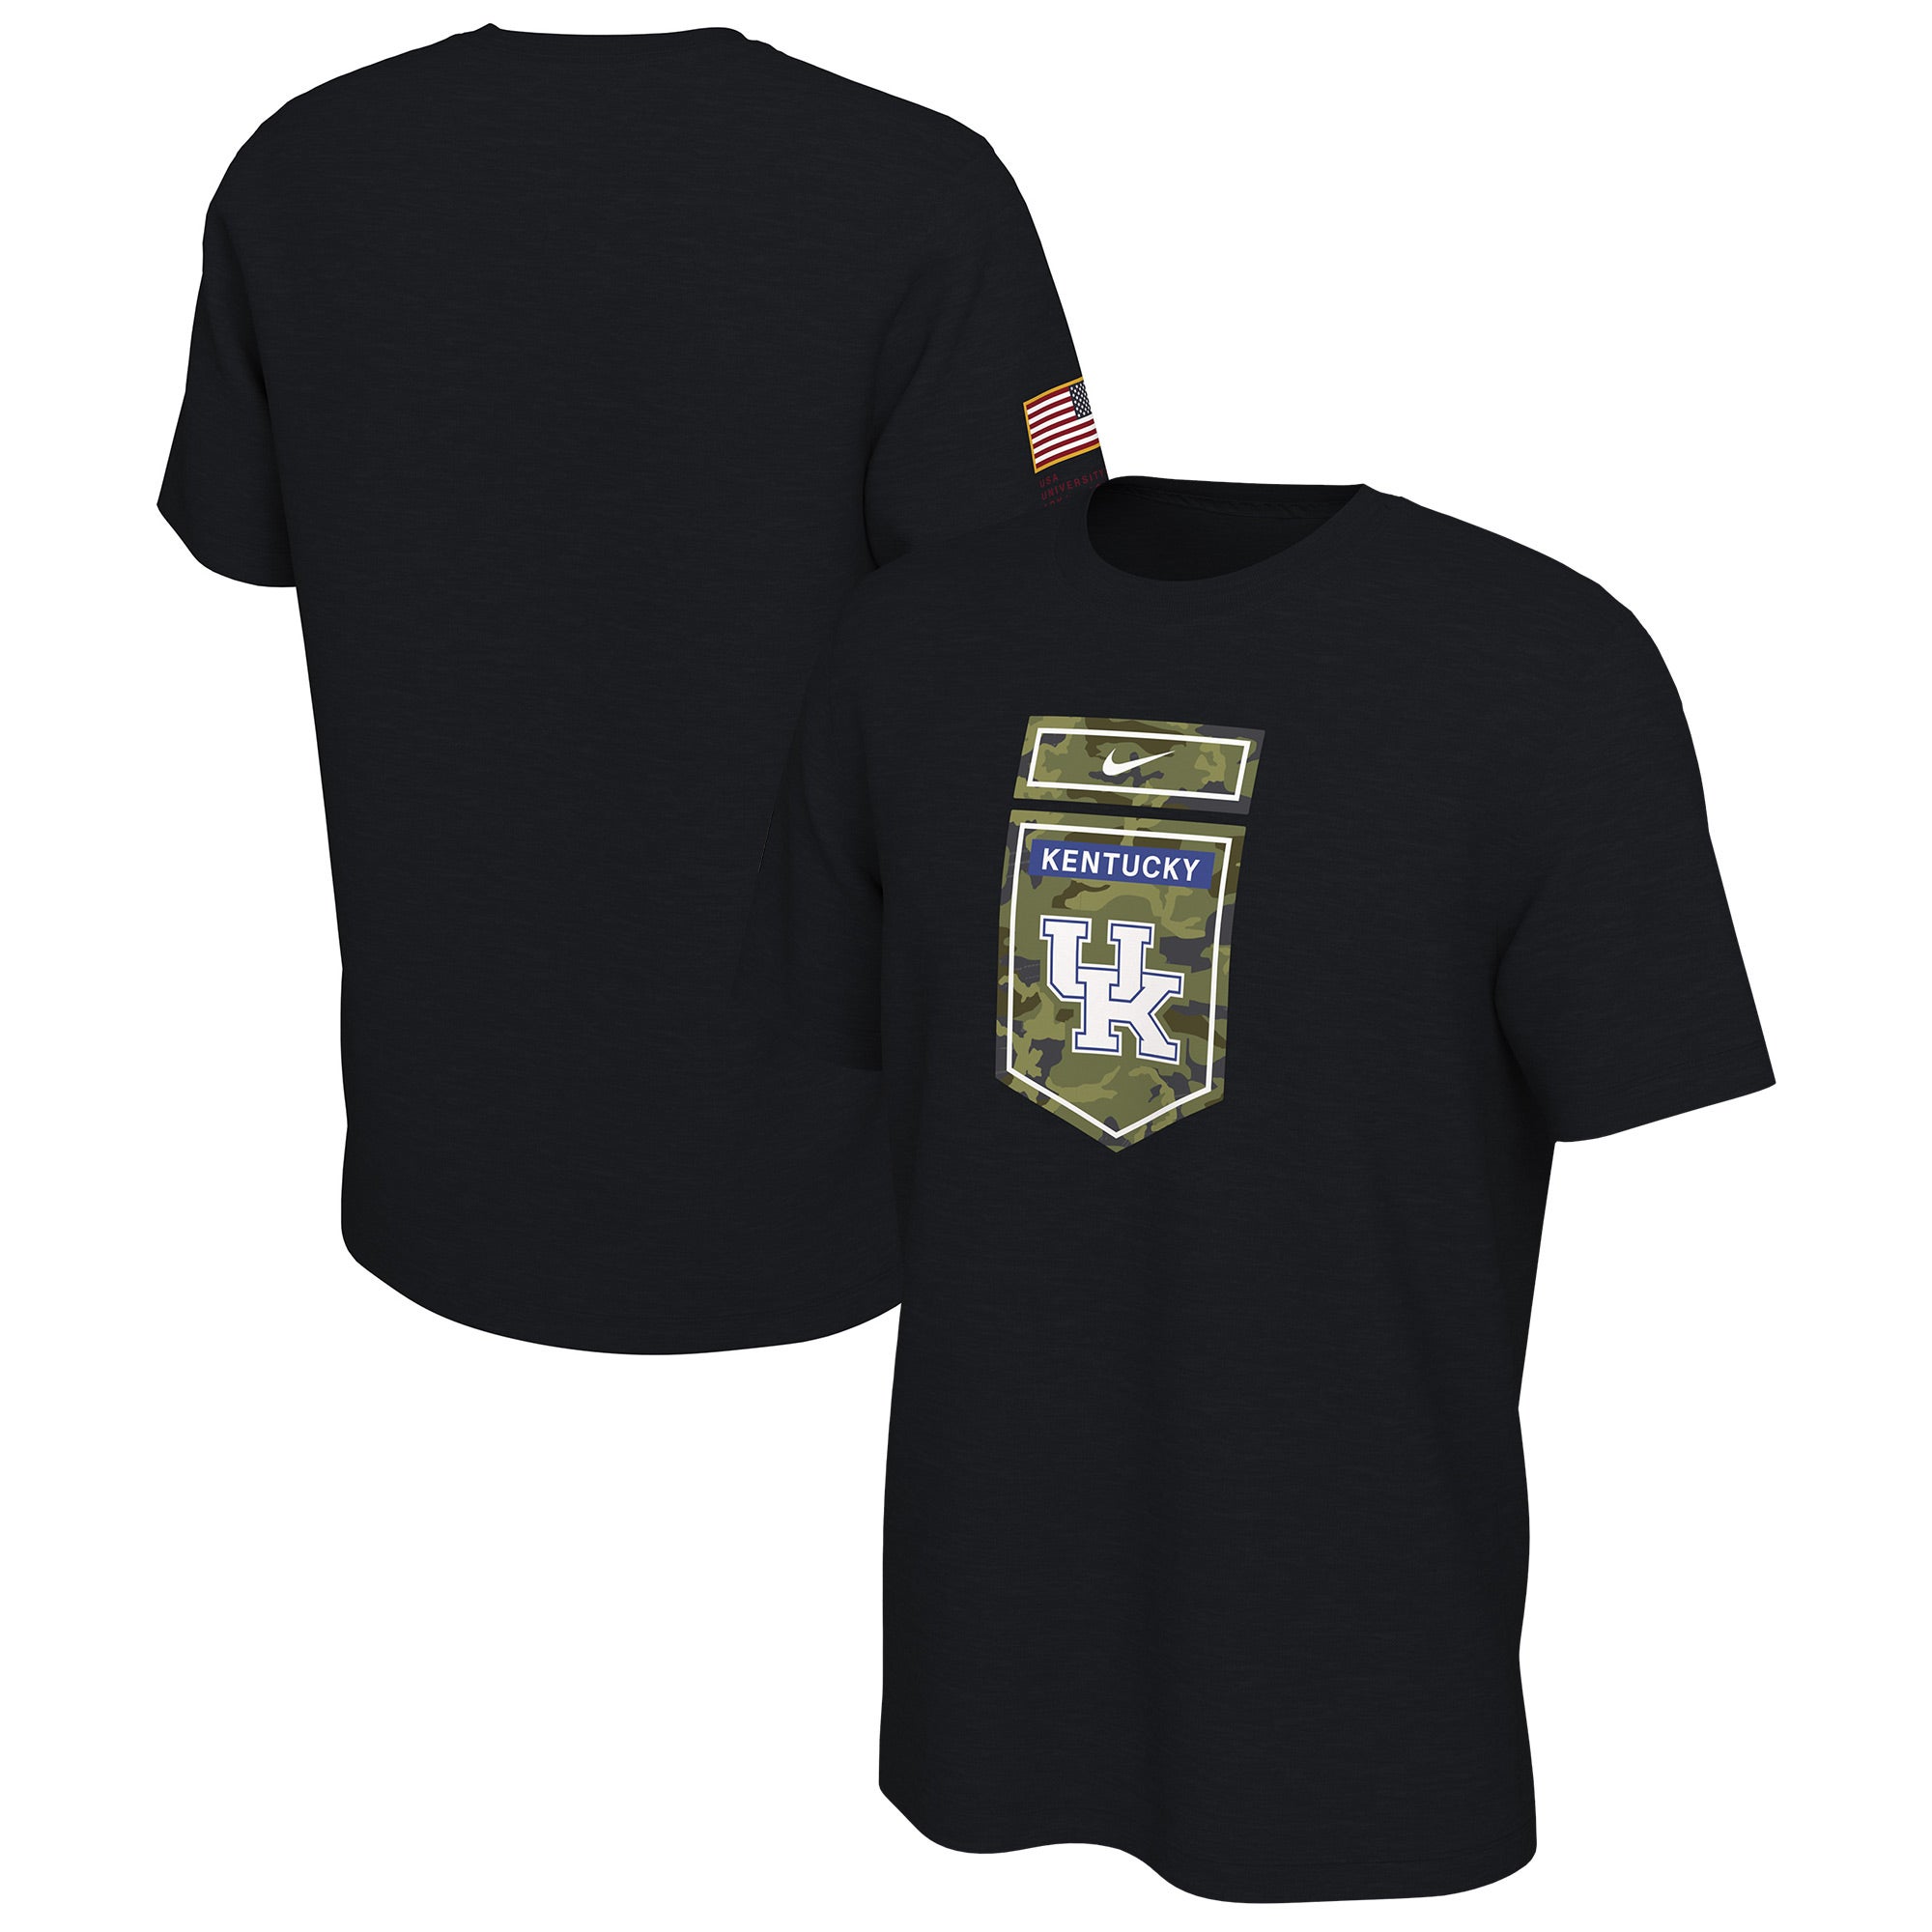 U.S. Military Tee Shirts from Kentucky